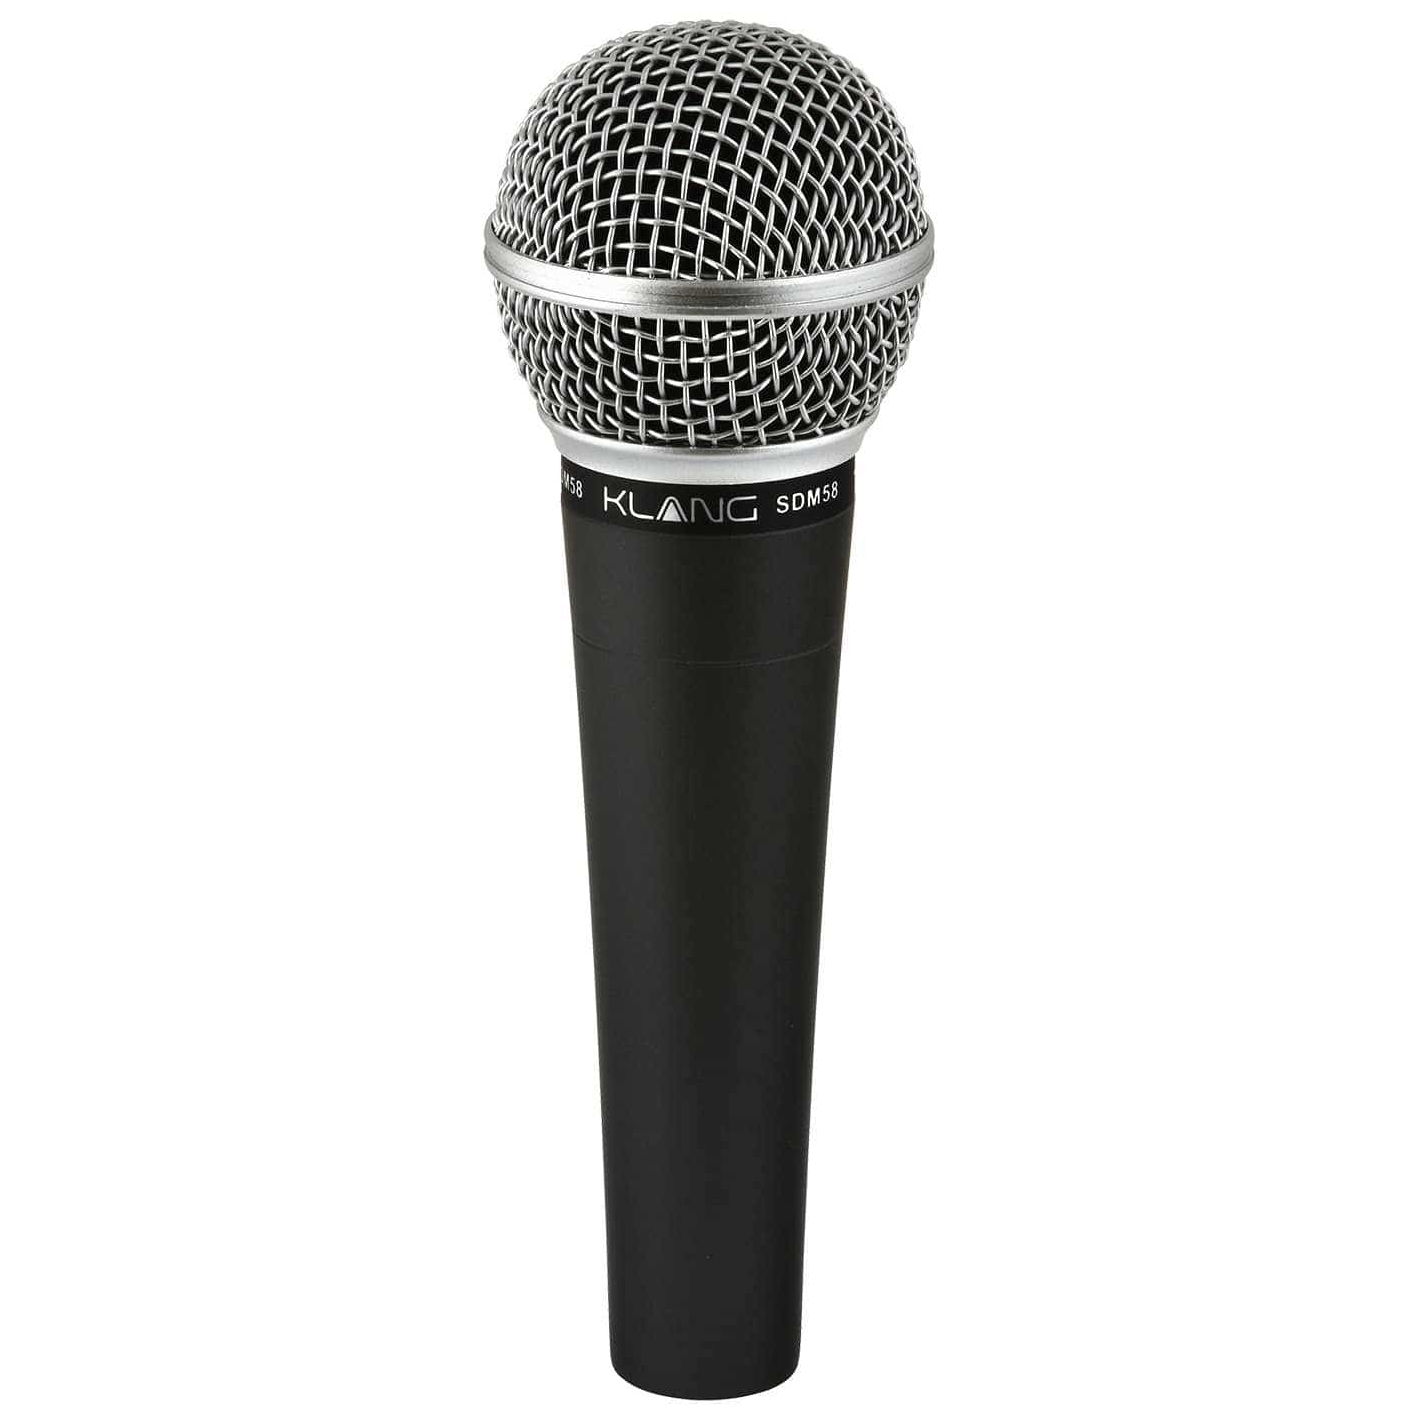 Klang SDM-58 dynamisches Mikrofon für Gesang